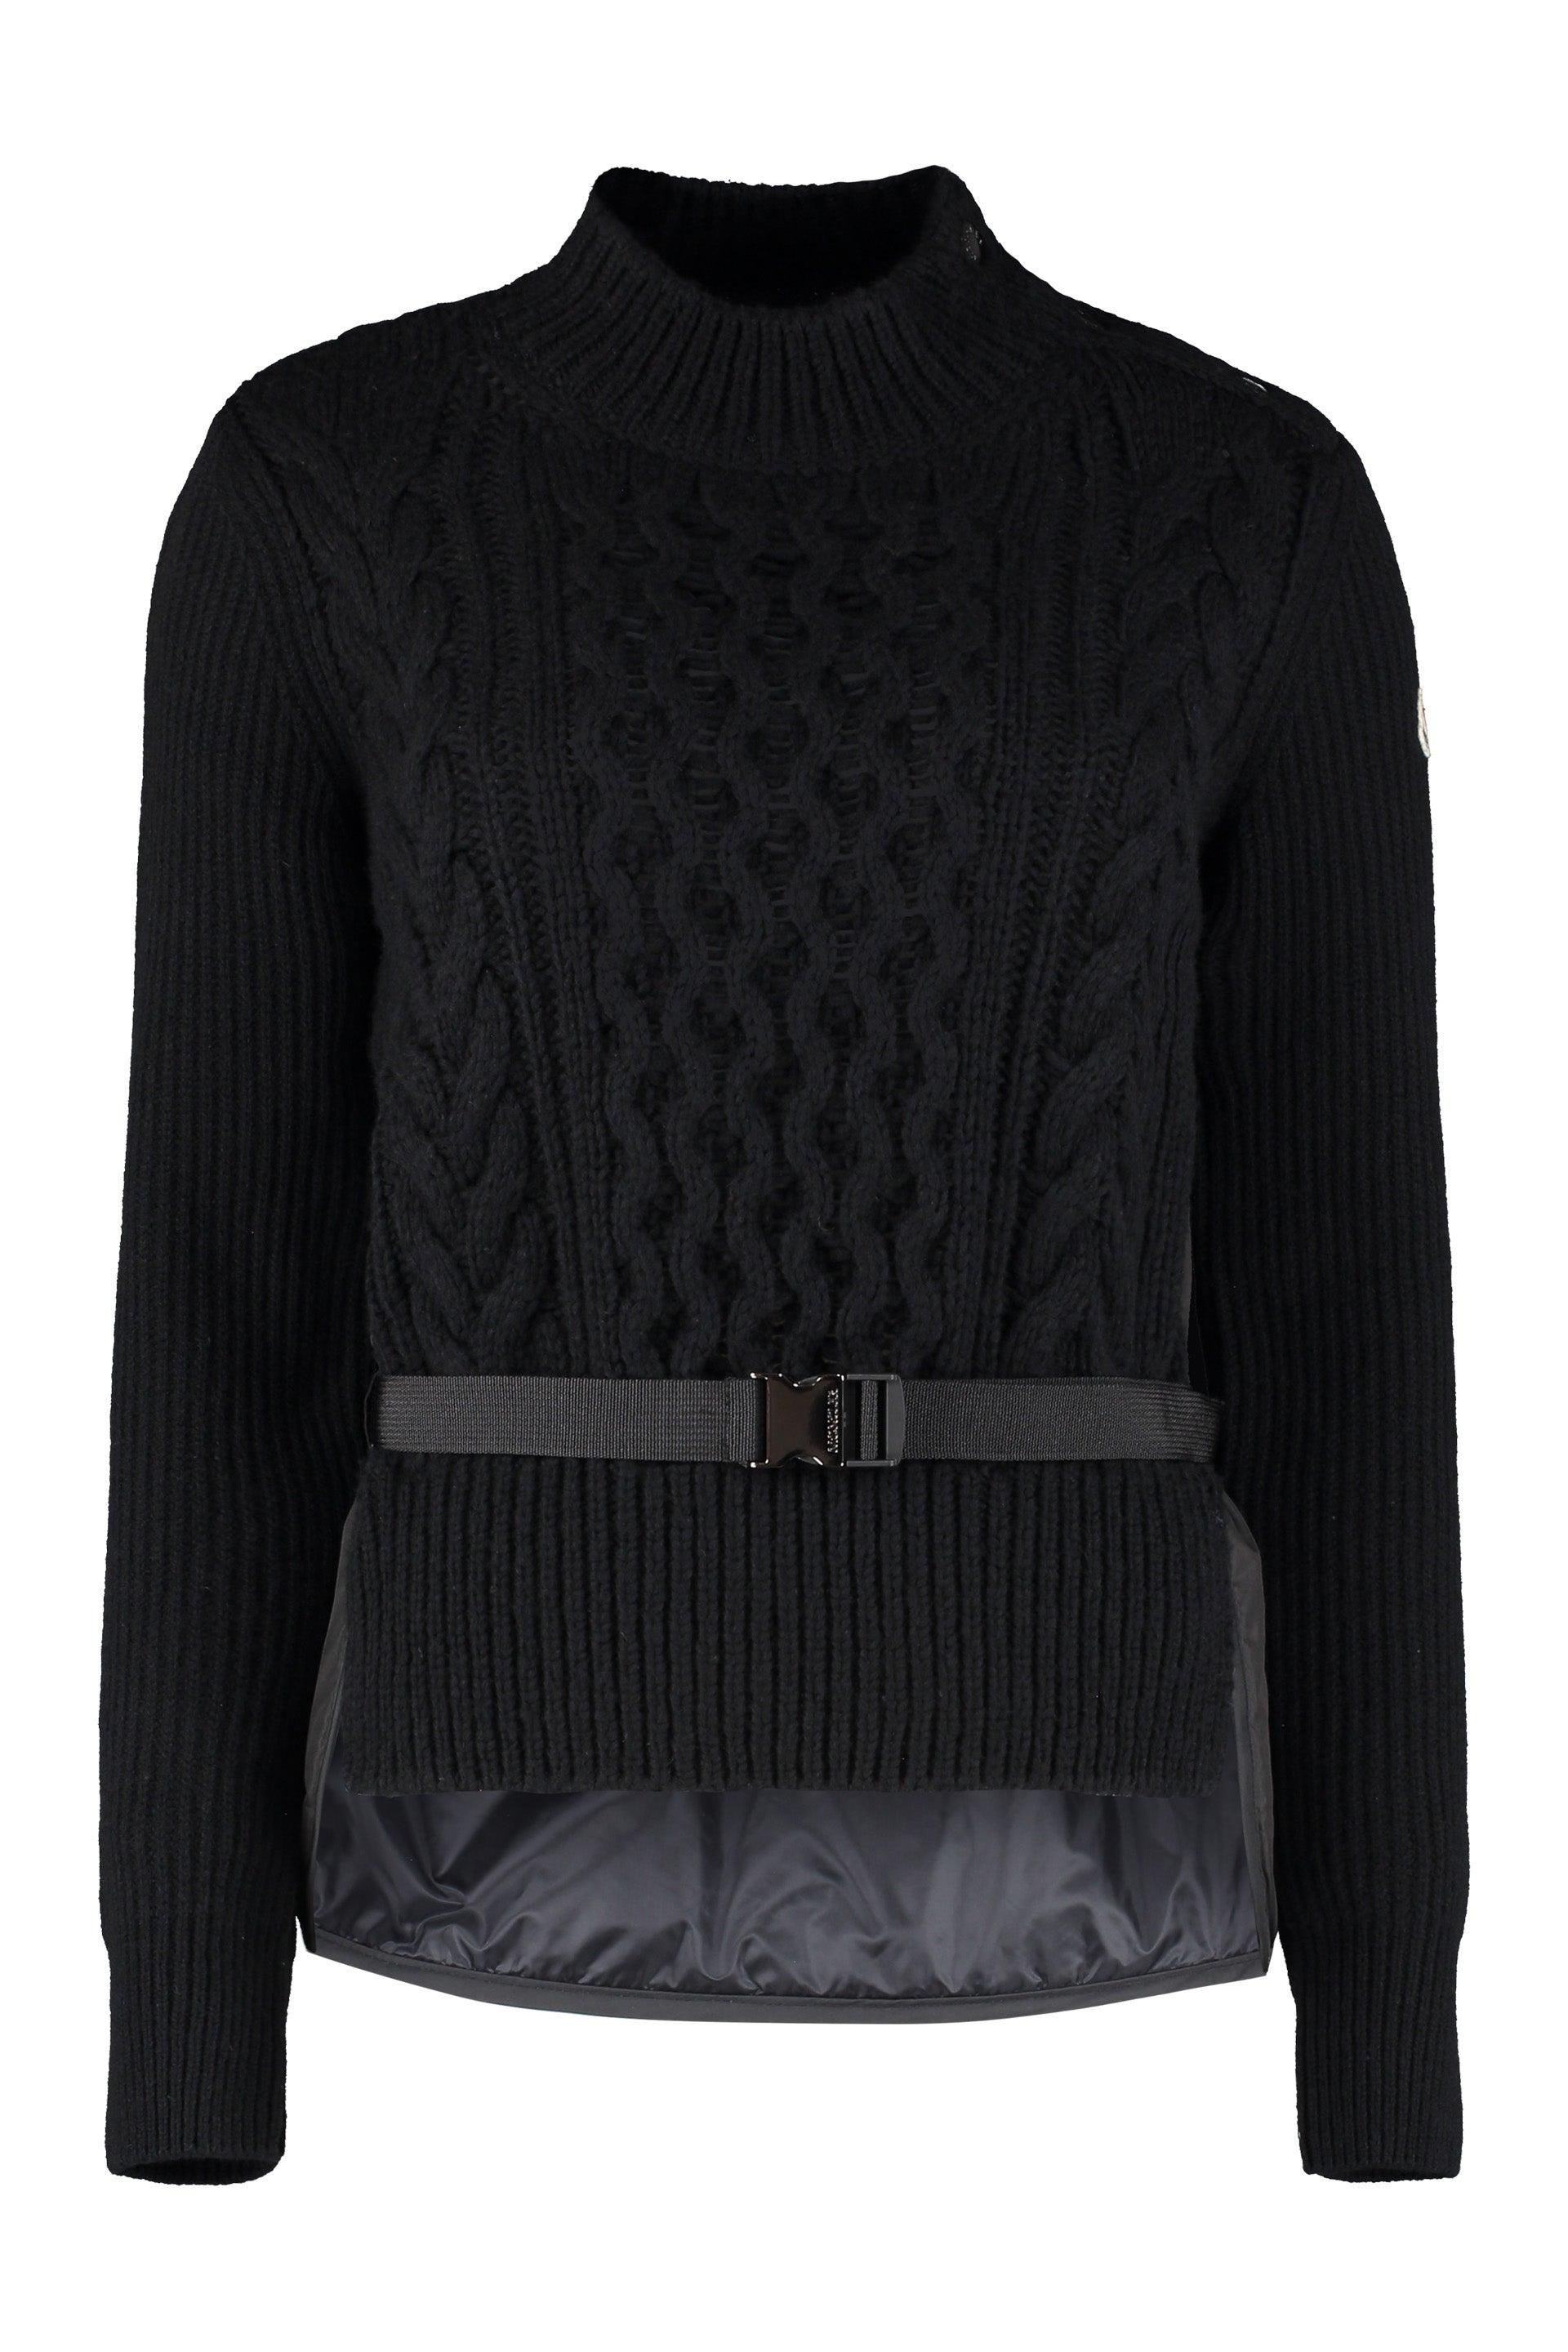 Moncler Belted Wool Jumper in Black | Lyst